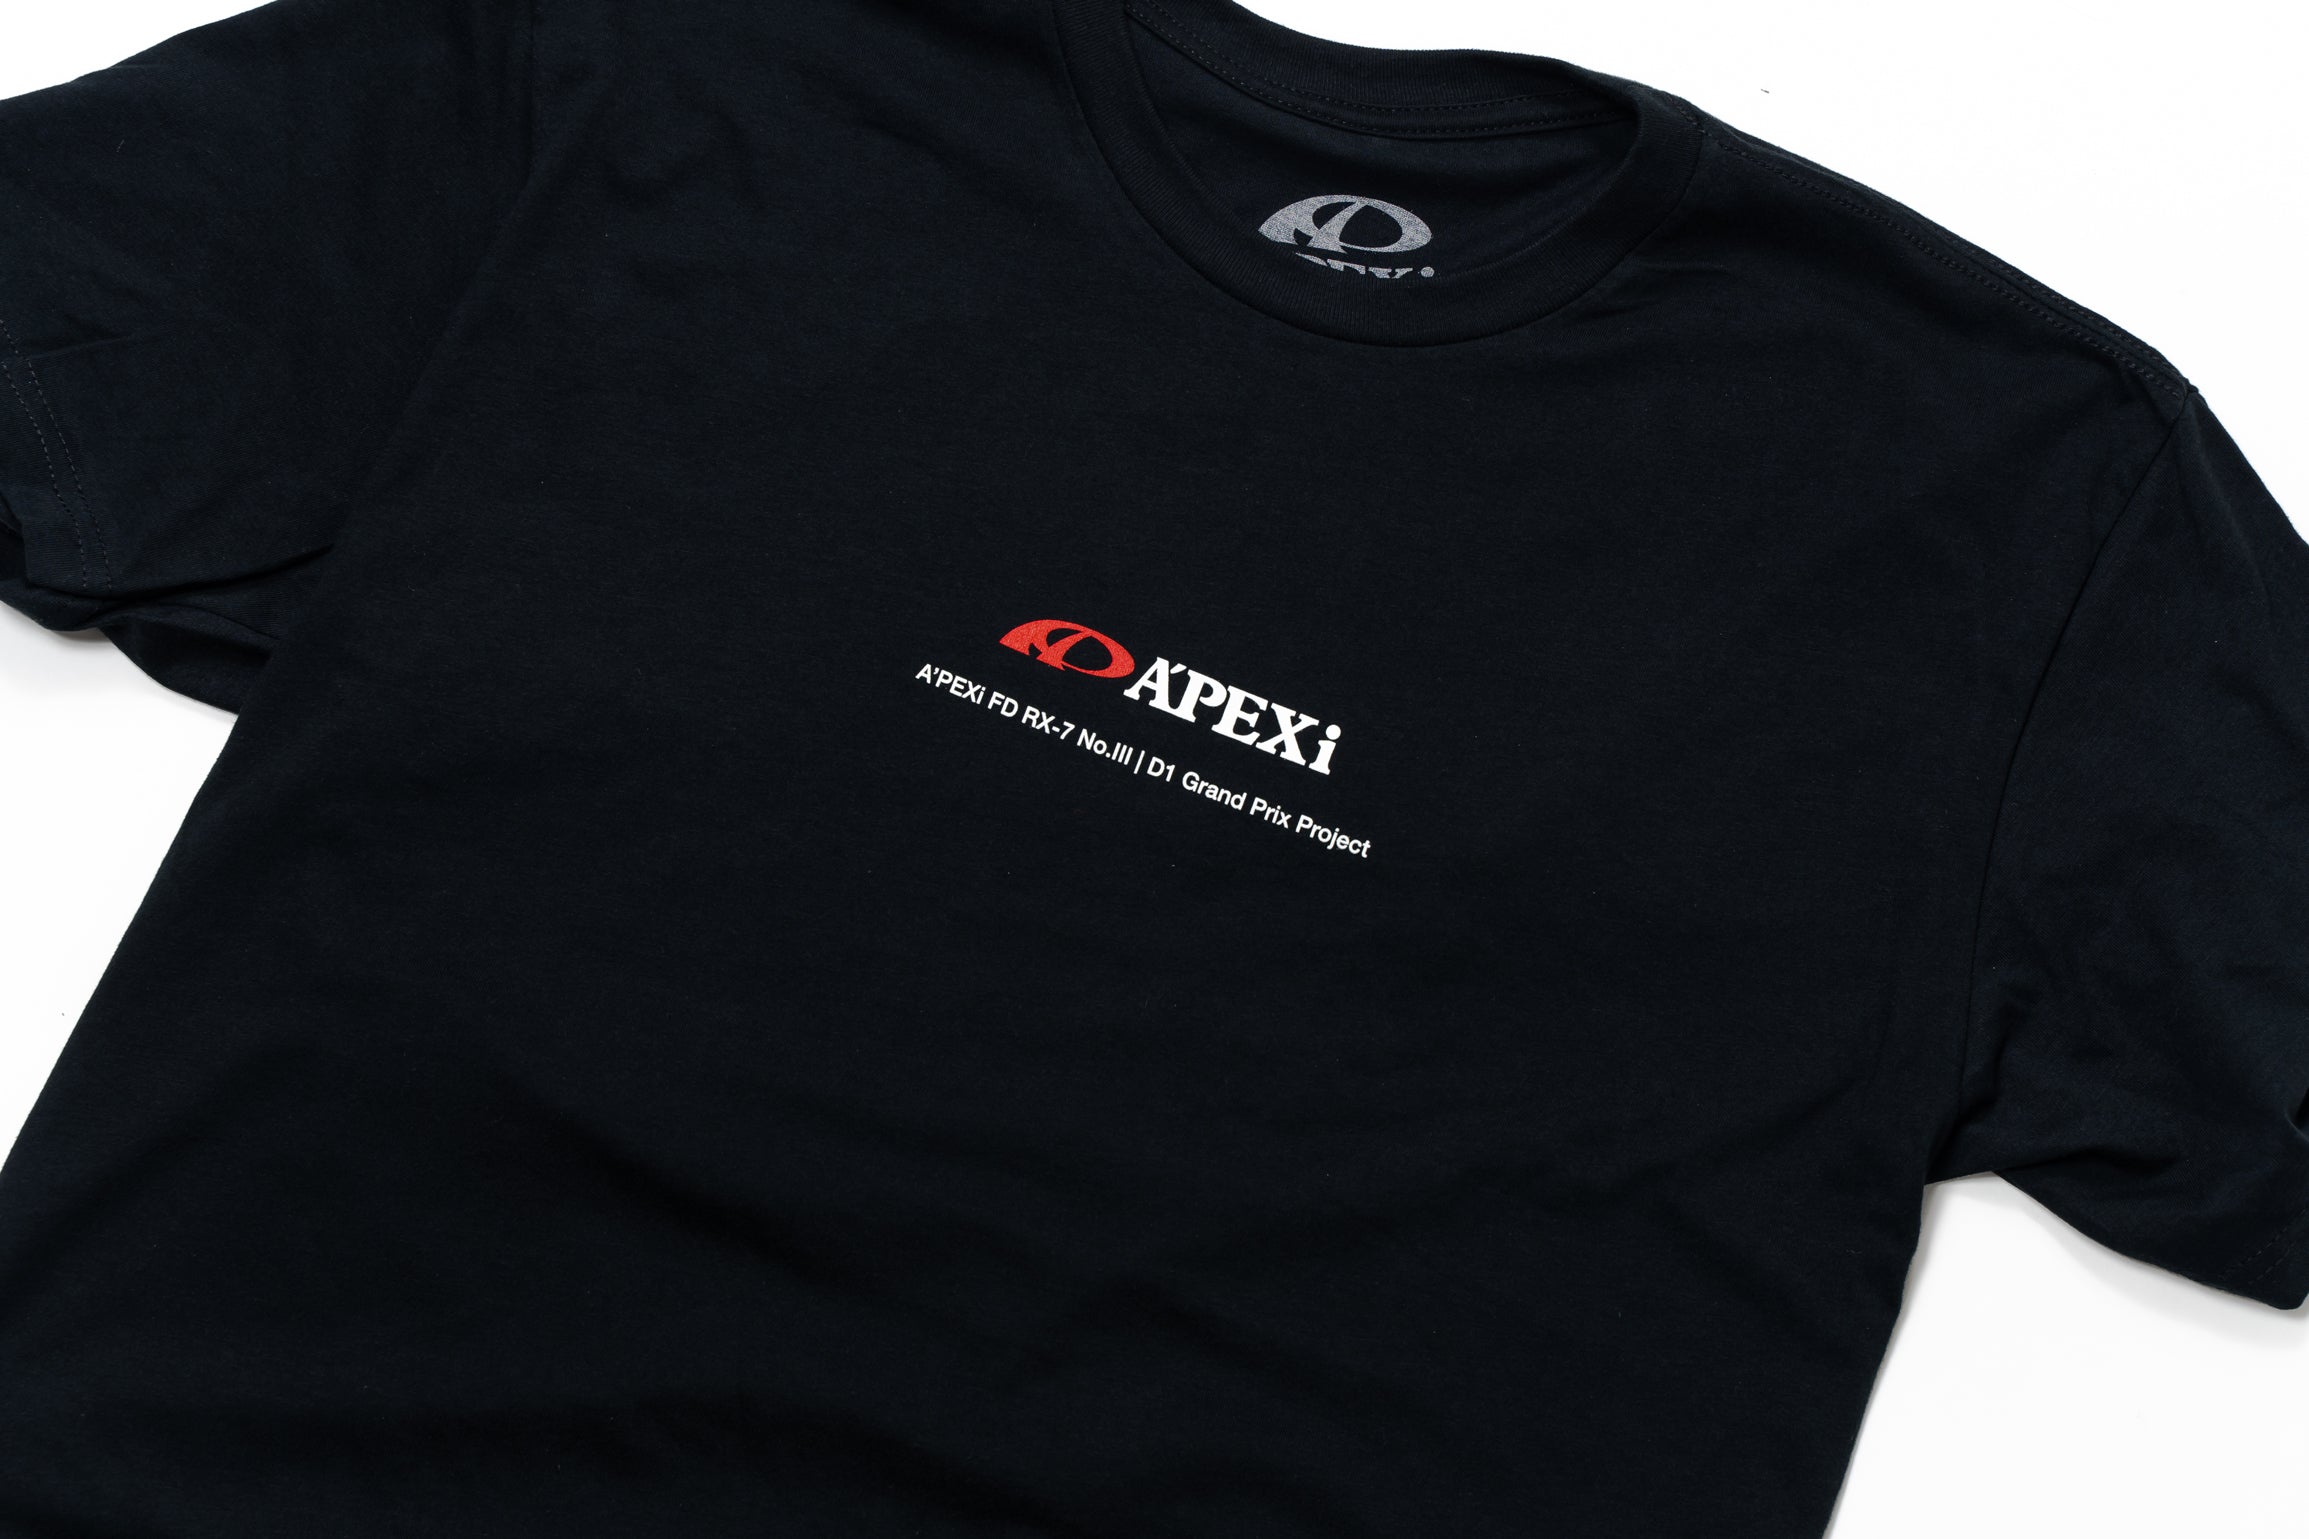 A'PEXi T-Shirt - FD RX-7 | D1 Grand Prix Project - Black (LIMITED EDITION) - 0